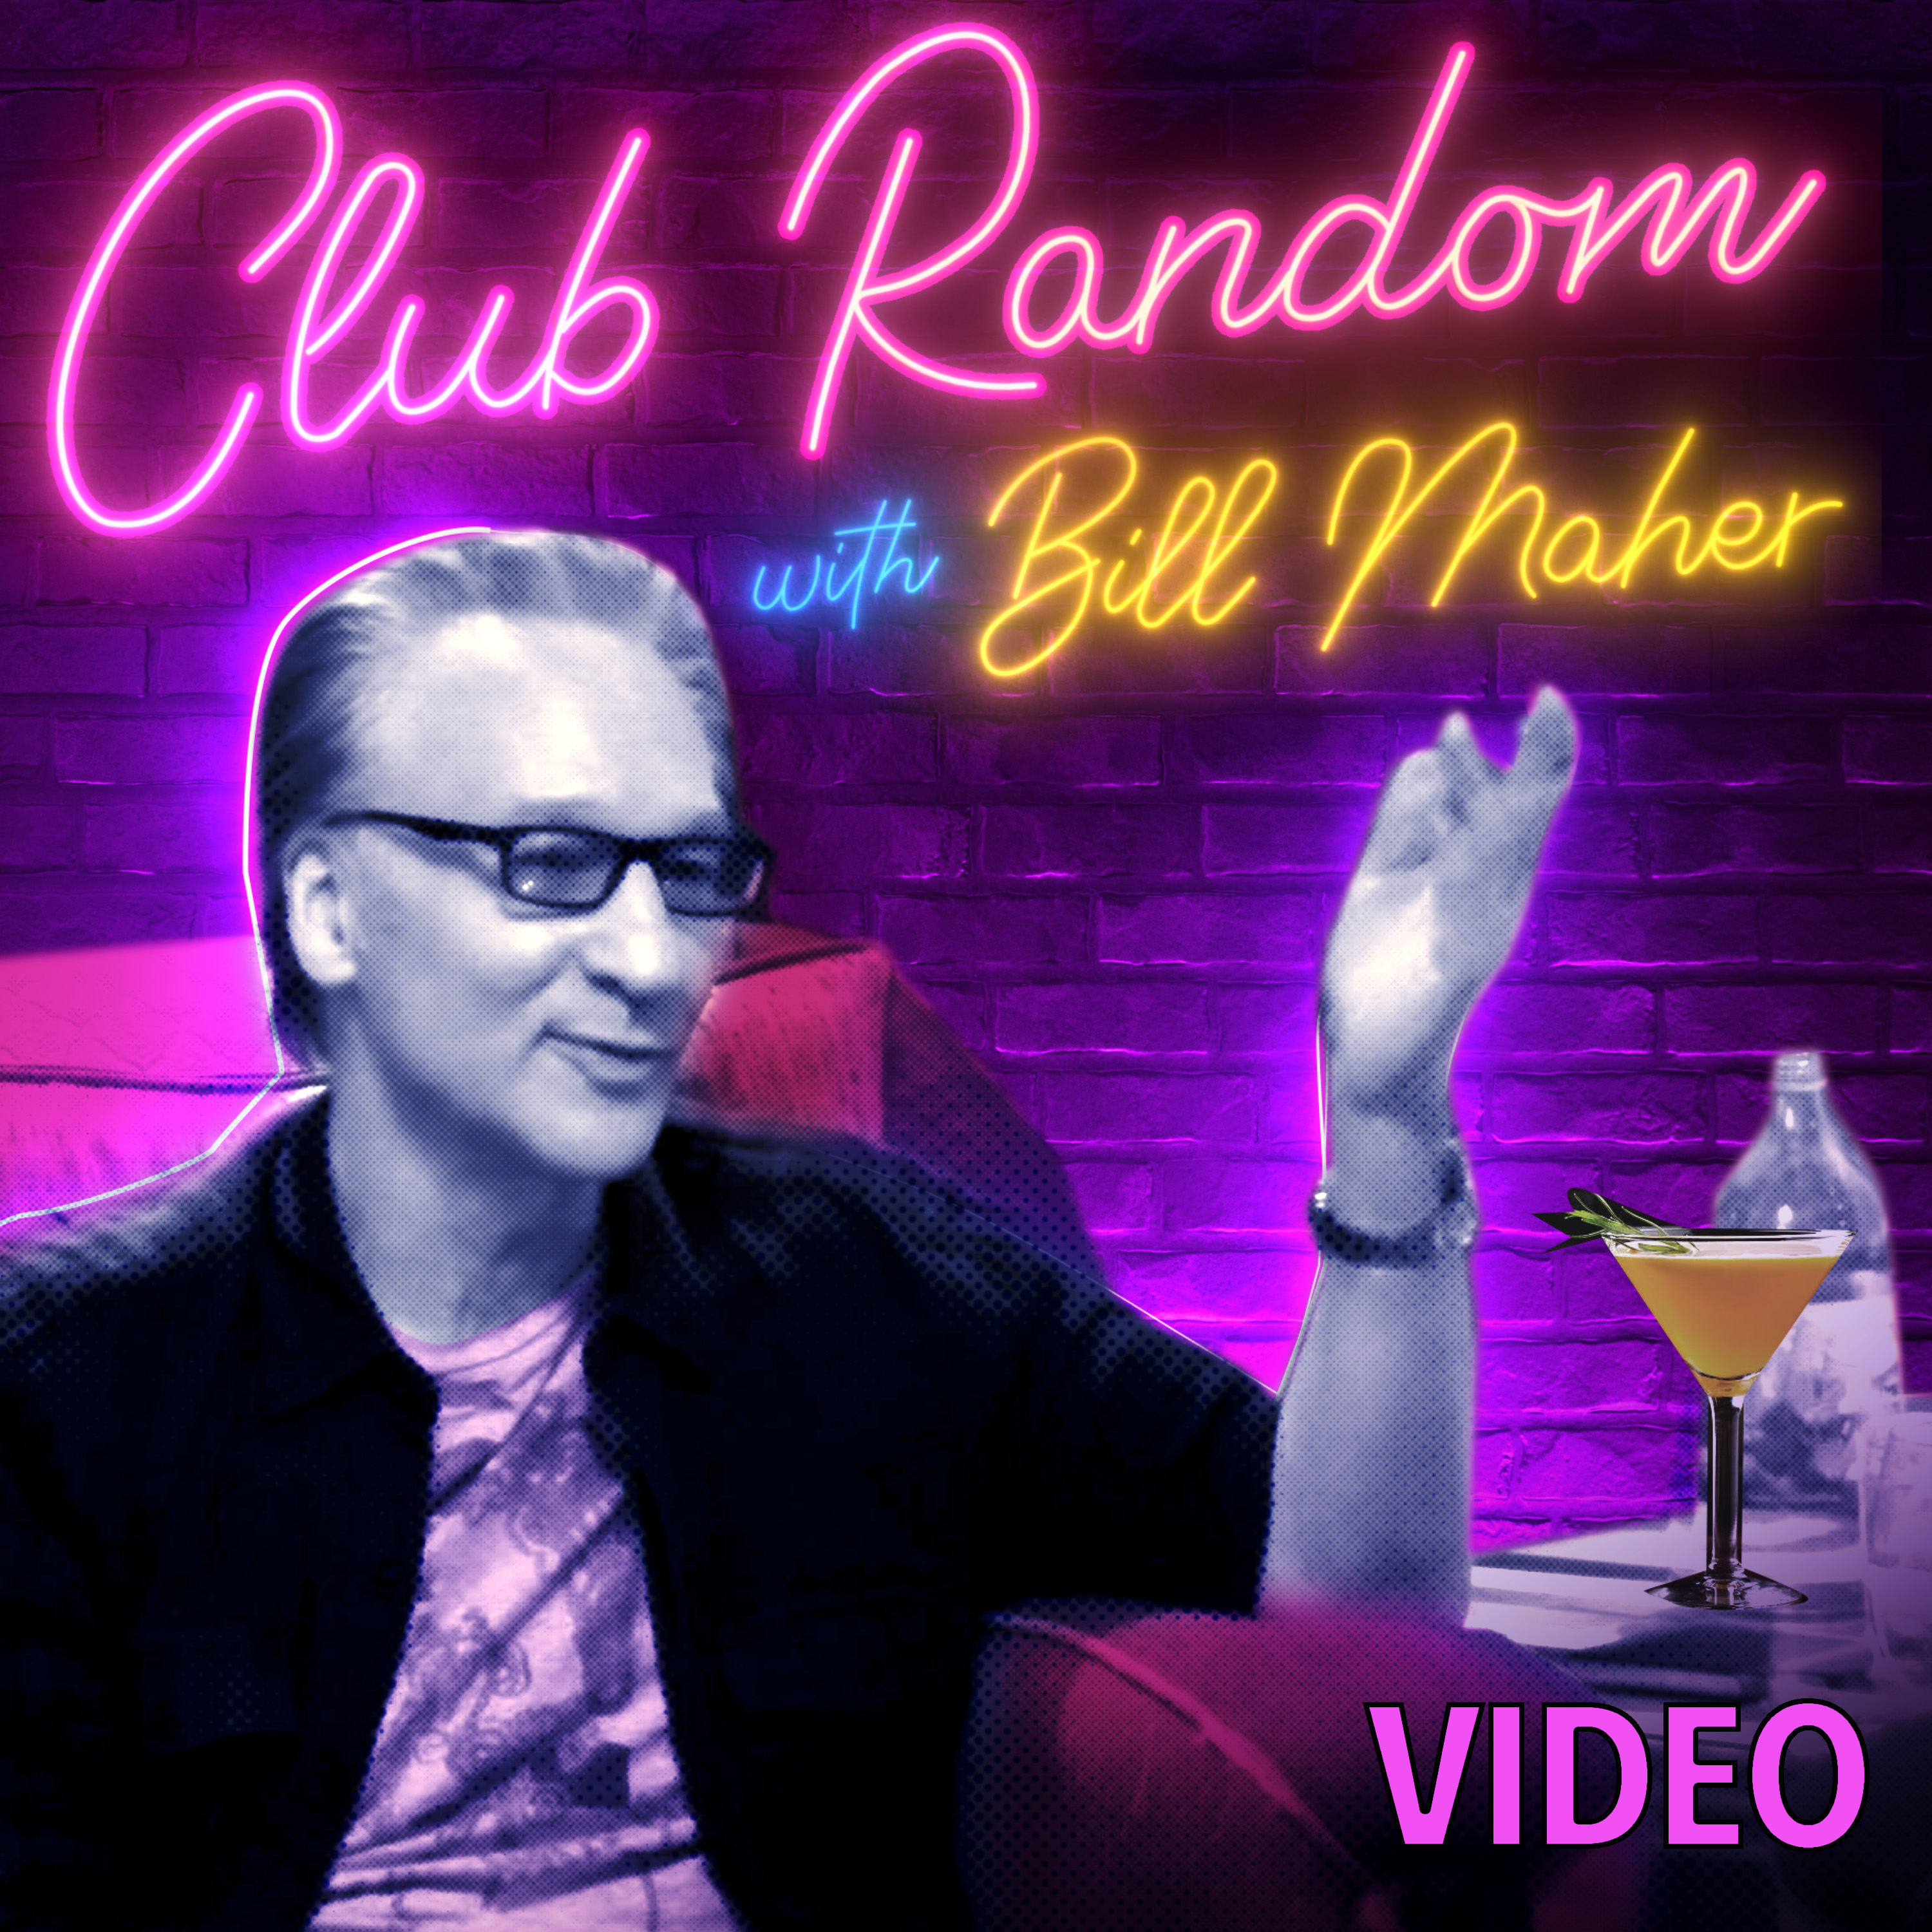 Video: Margaret Cho | Club Random with Bill Maher